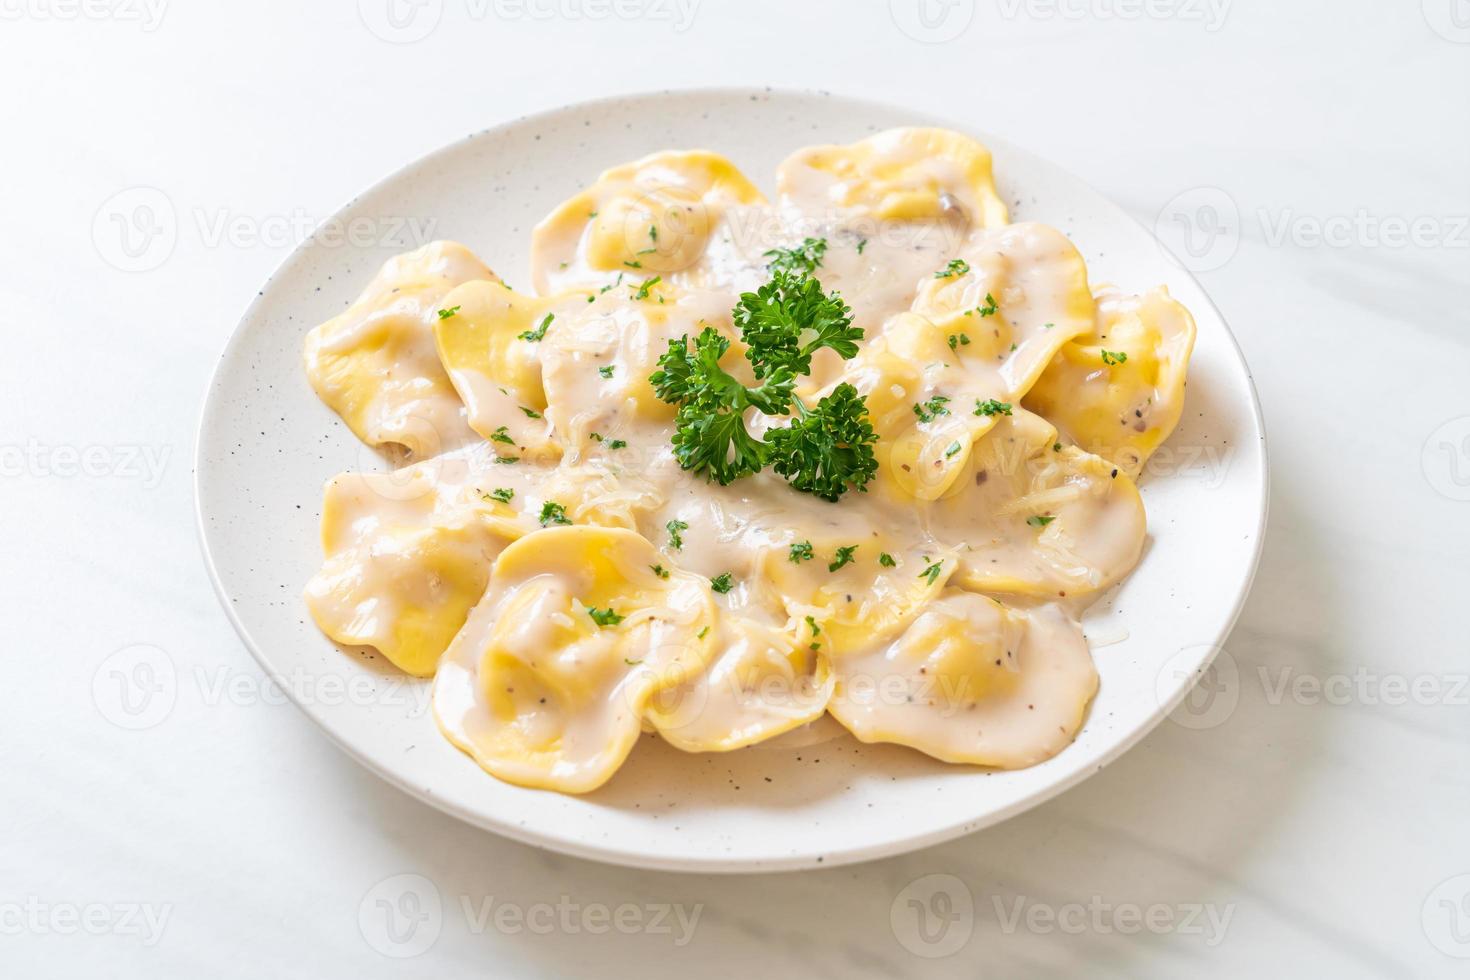 Ravioli pasta with mushroom cream sauce and cheese - Italian food style photo